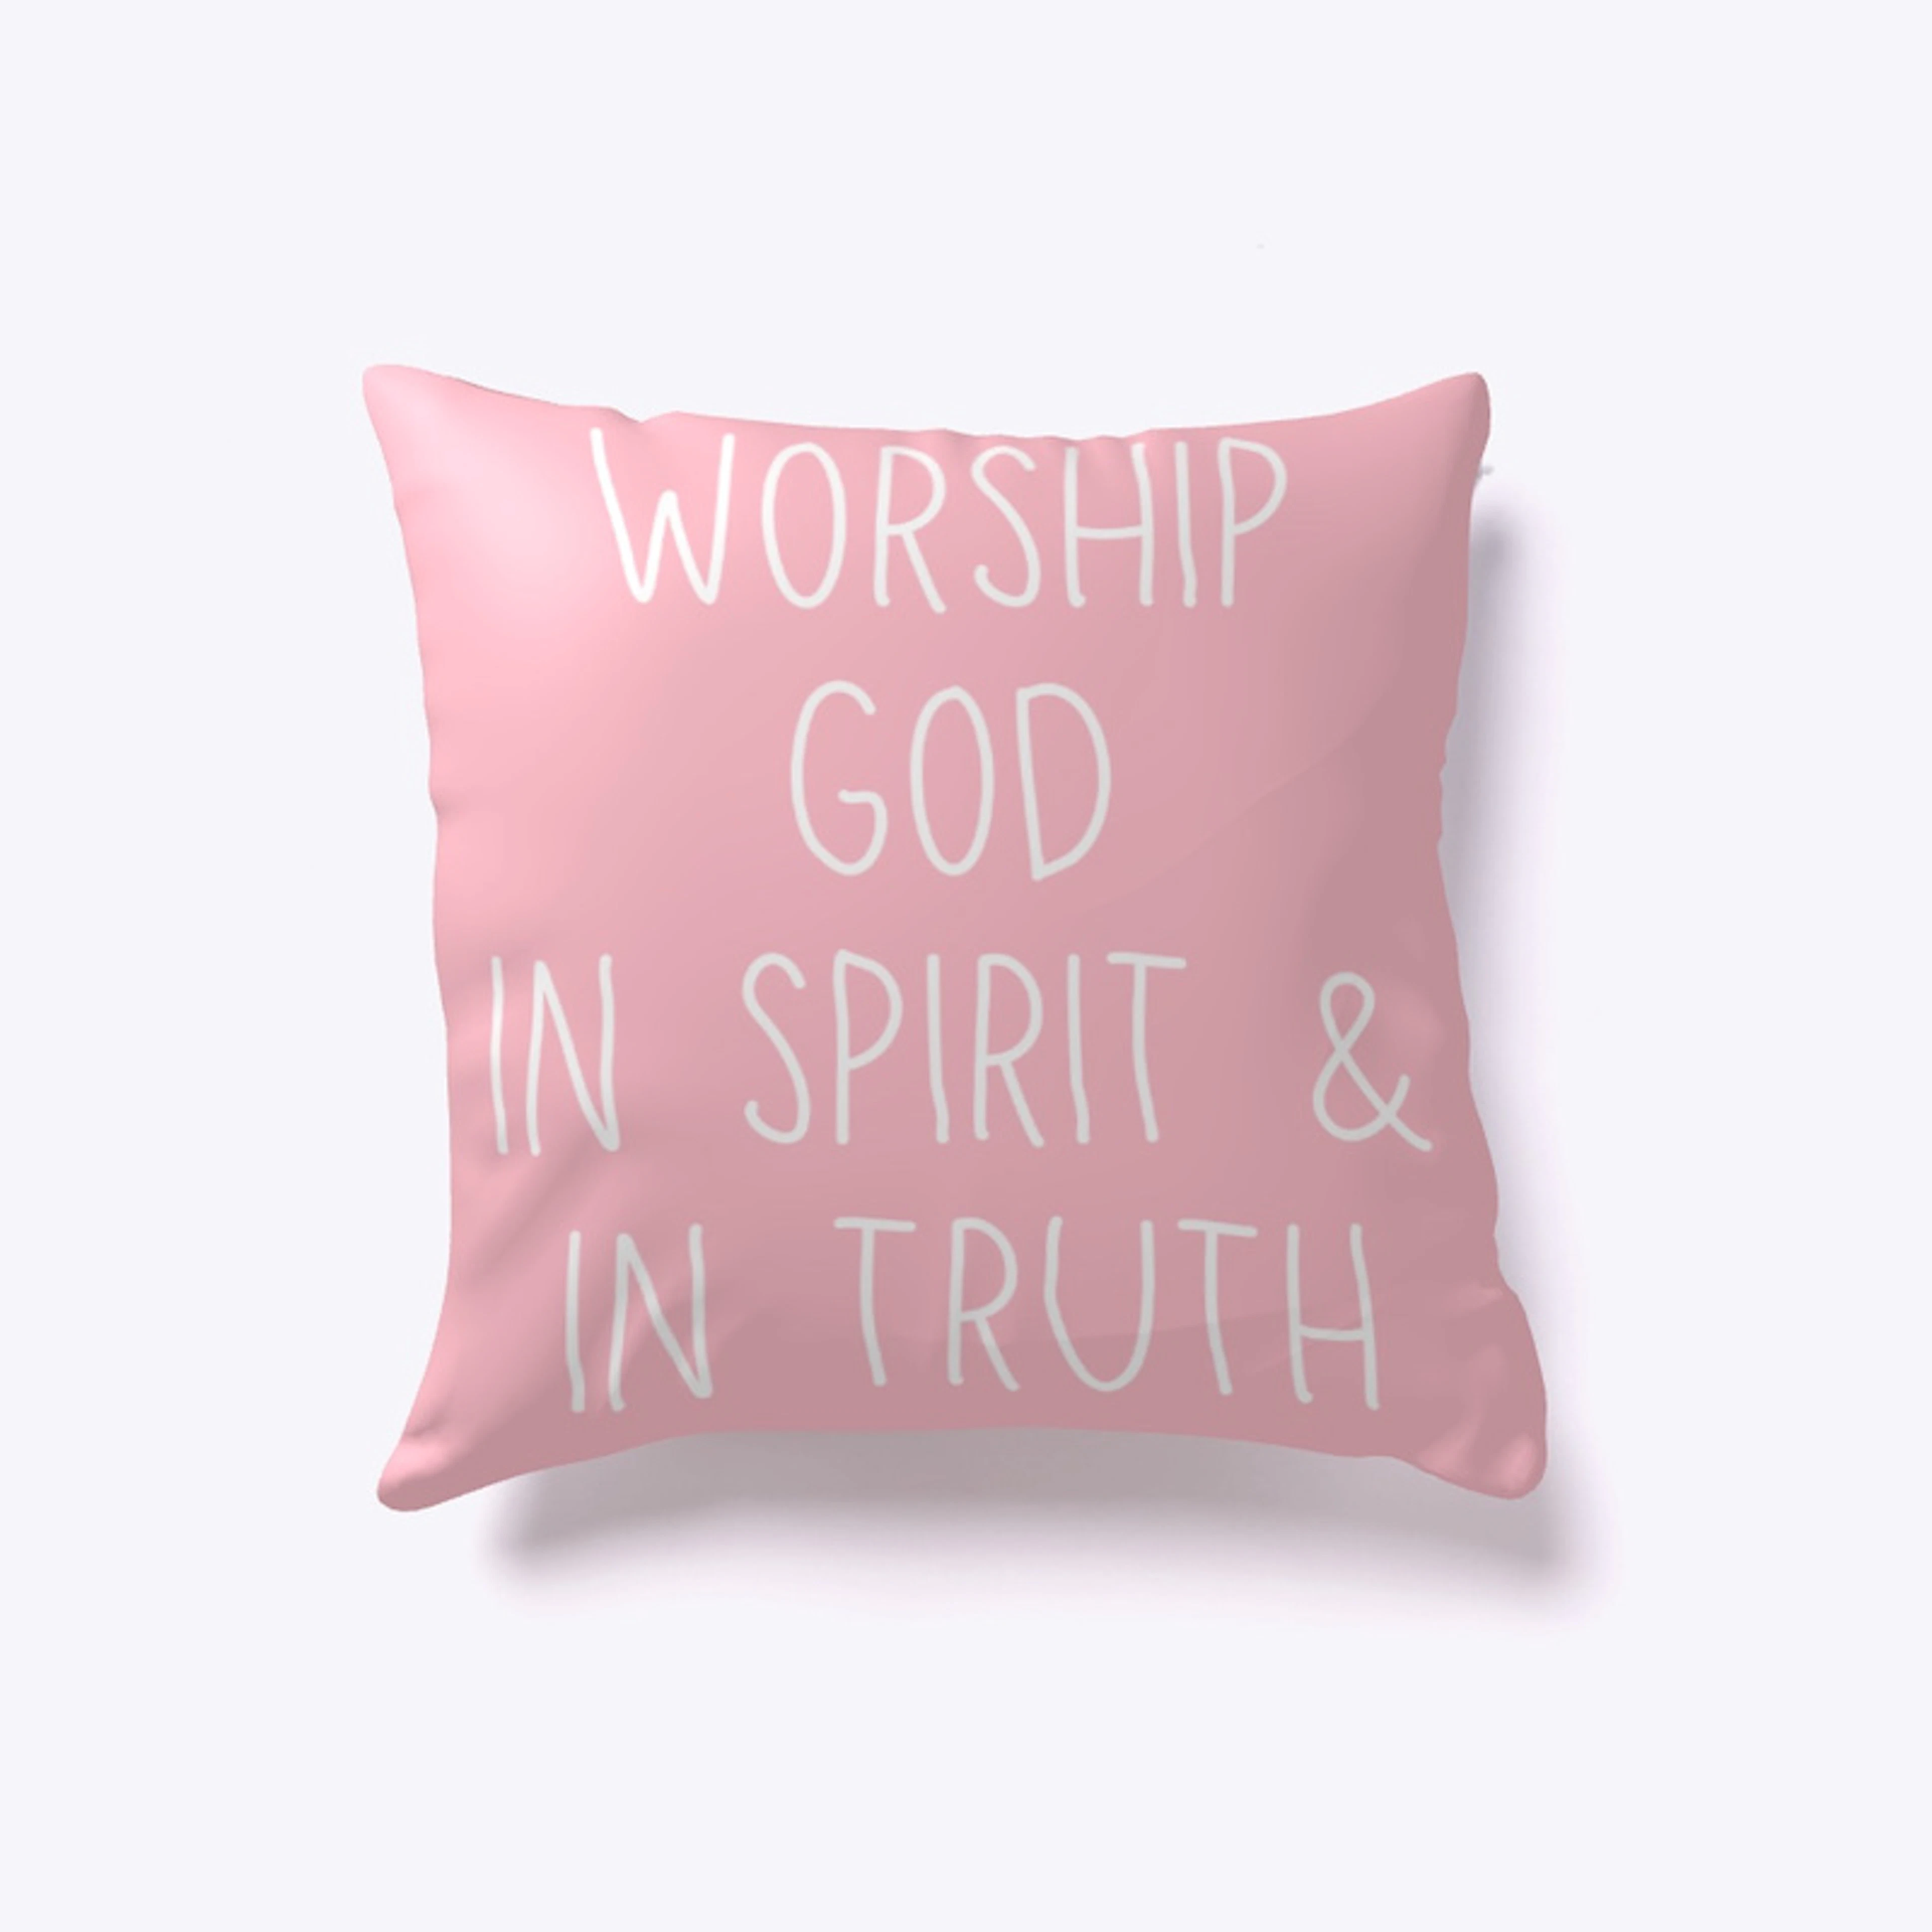 Worship God In Spirt & In Truth (White)